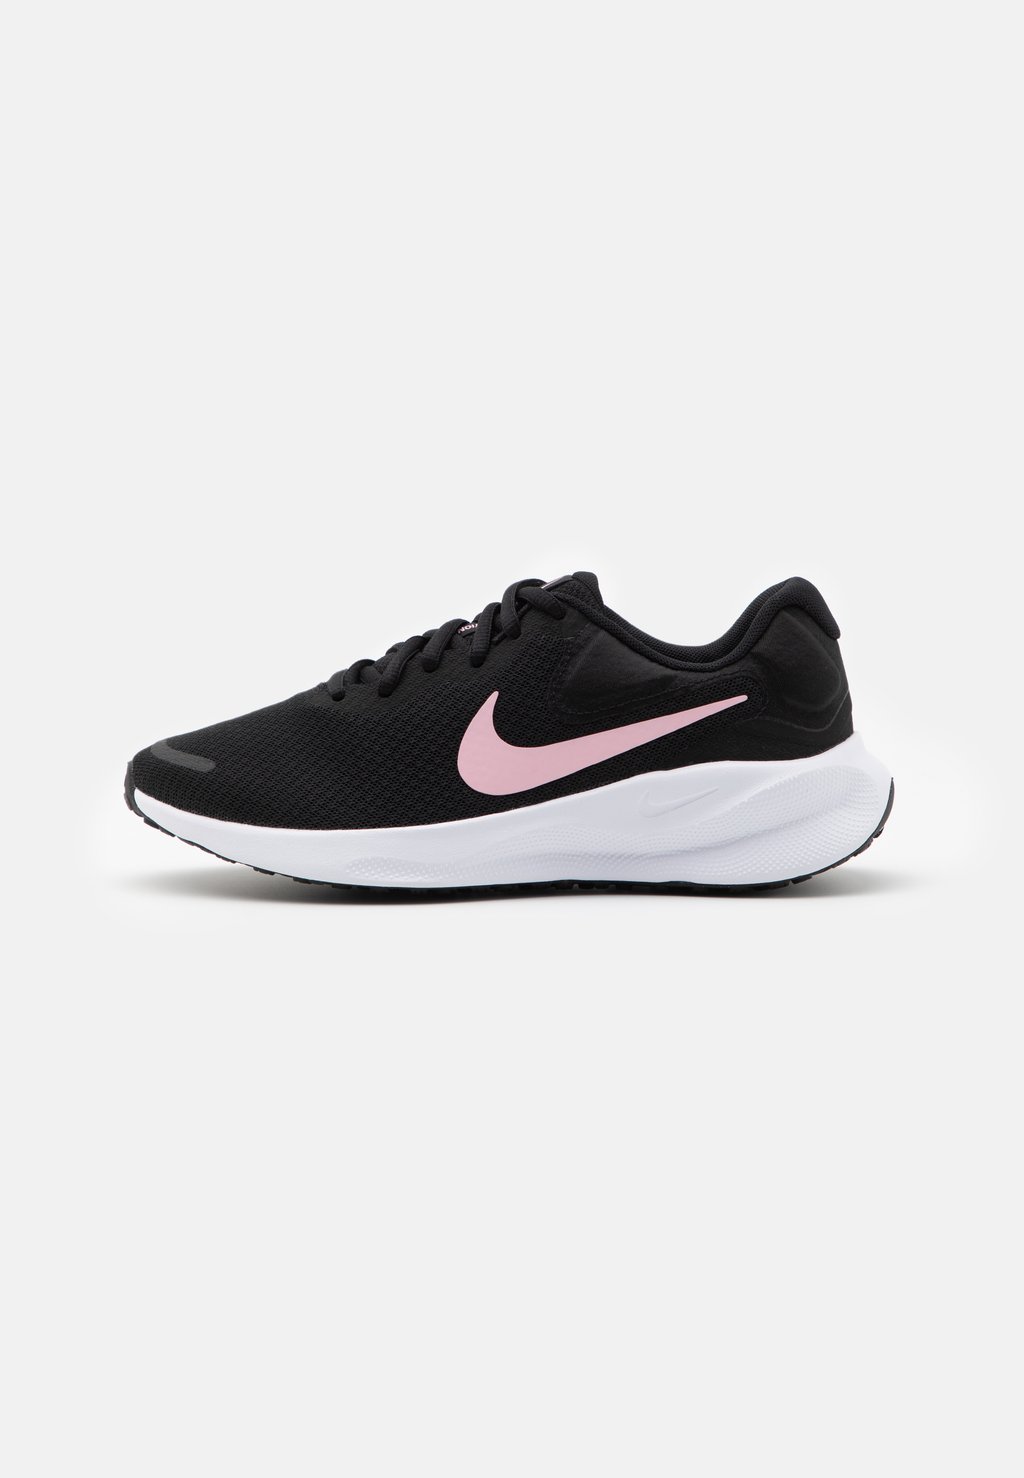 Нейтральные кроссовки REVOLUTION 7 Nike, цвет black/med soft pink/white